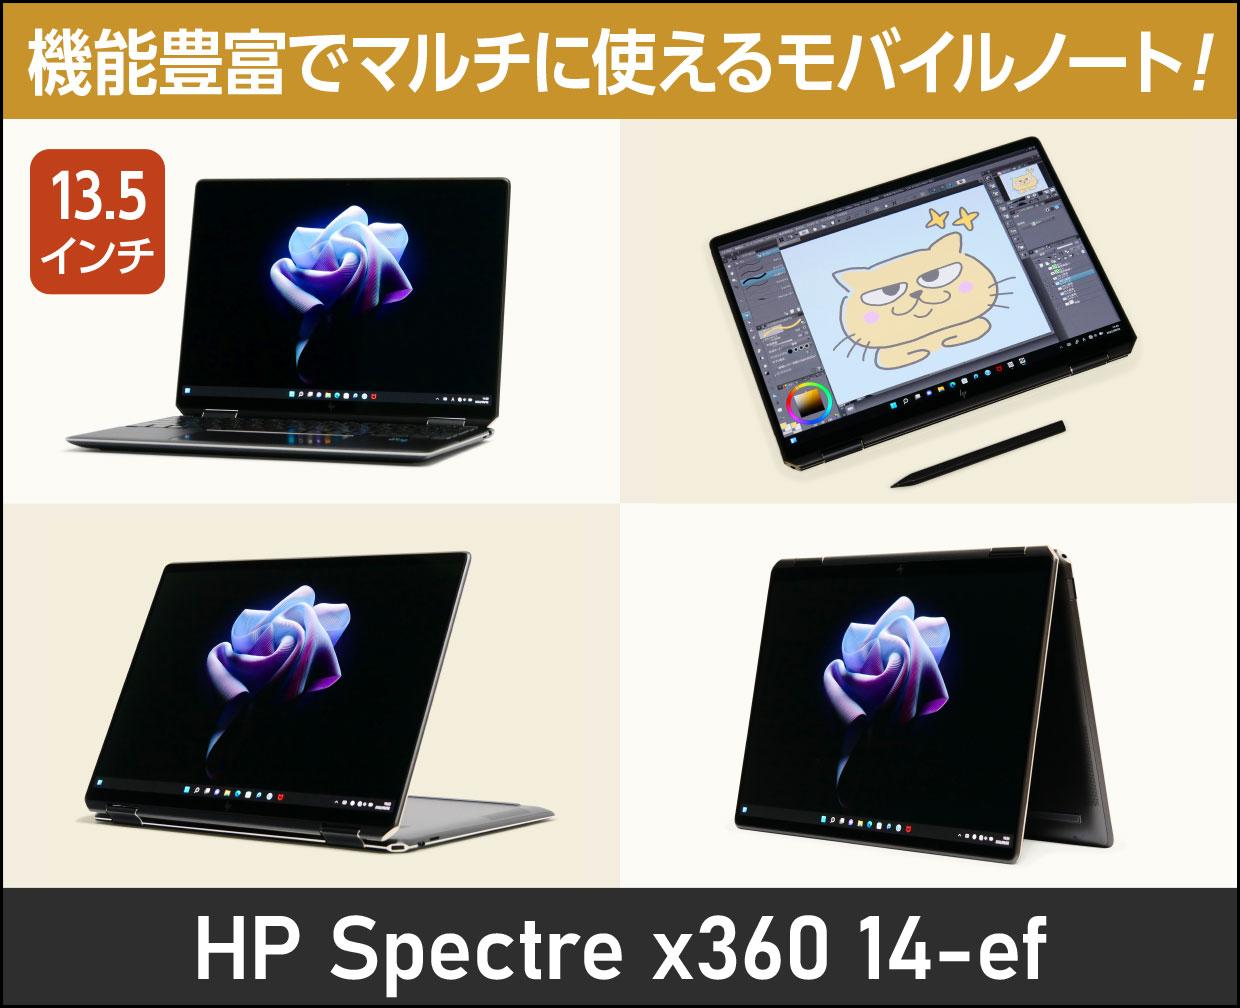 HP Spectre x360 14-efのメイン画像